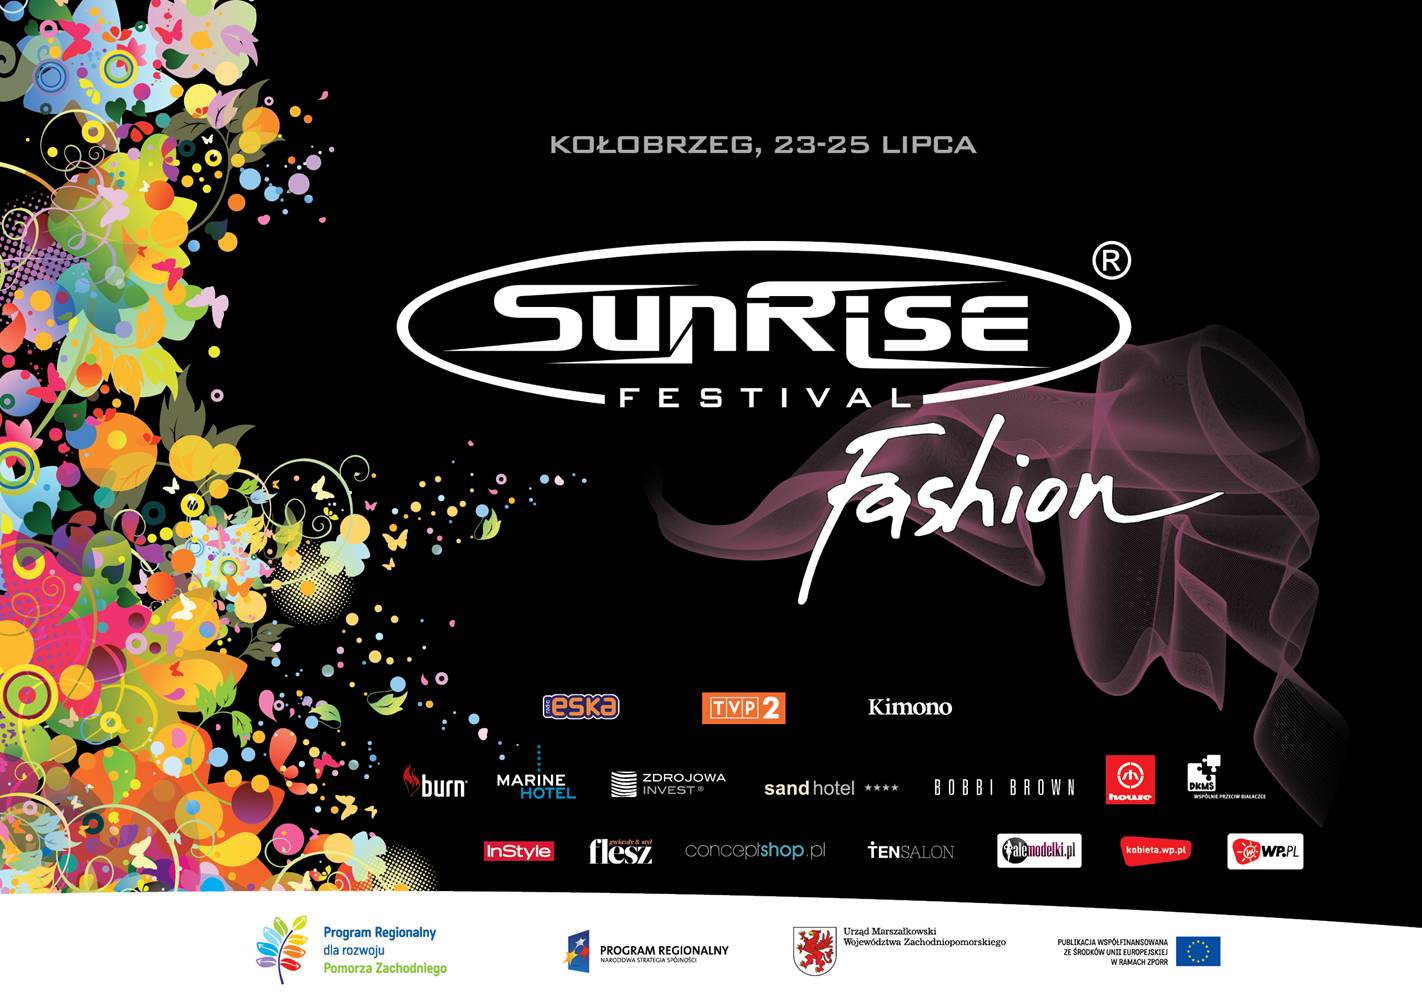 Sunrise Fashion Festival poster